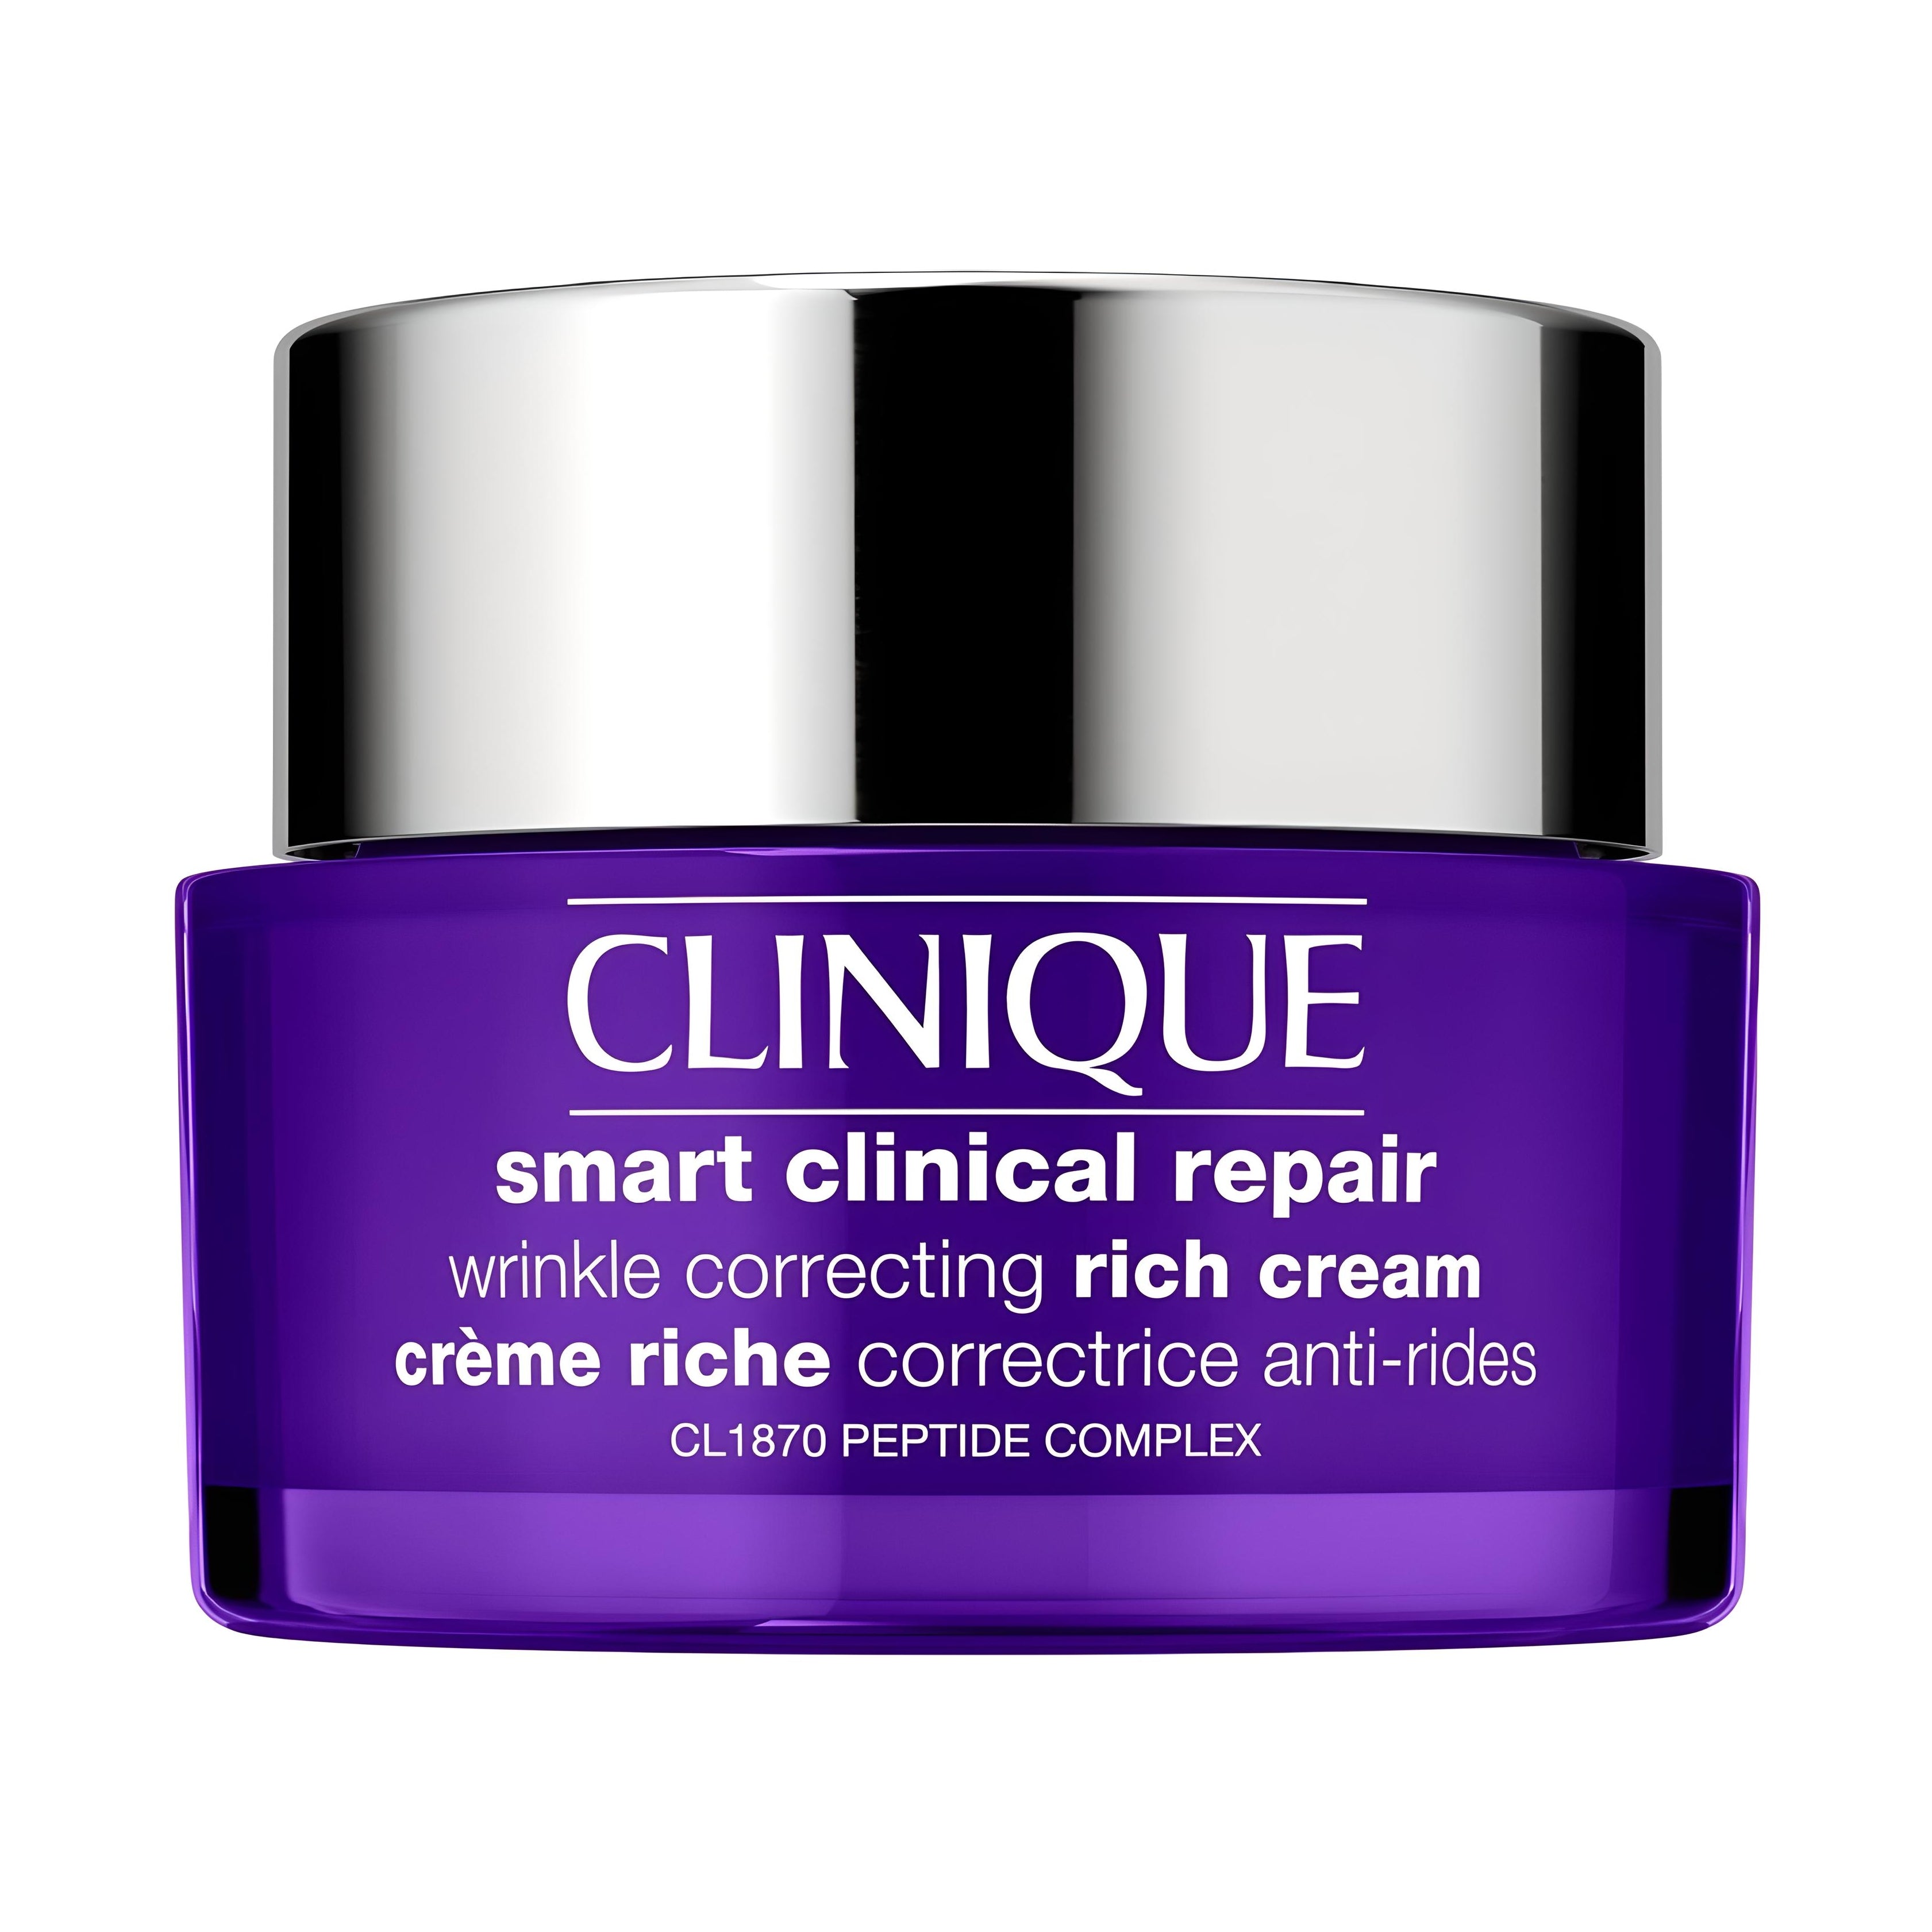 SMART CLINICAL REPAIR™ wrinkle correcting rich cream Gesichtspflege CLINIQUE   